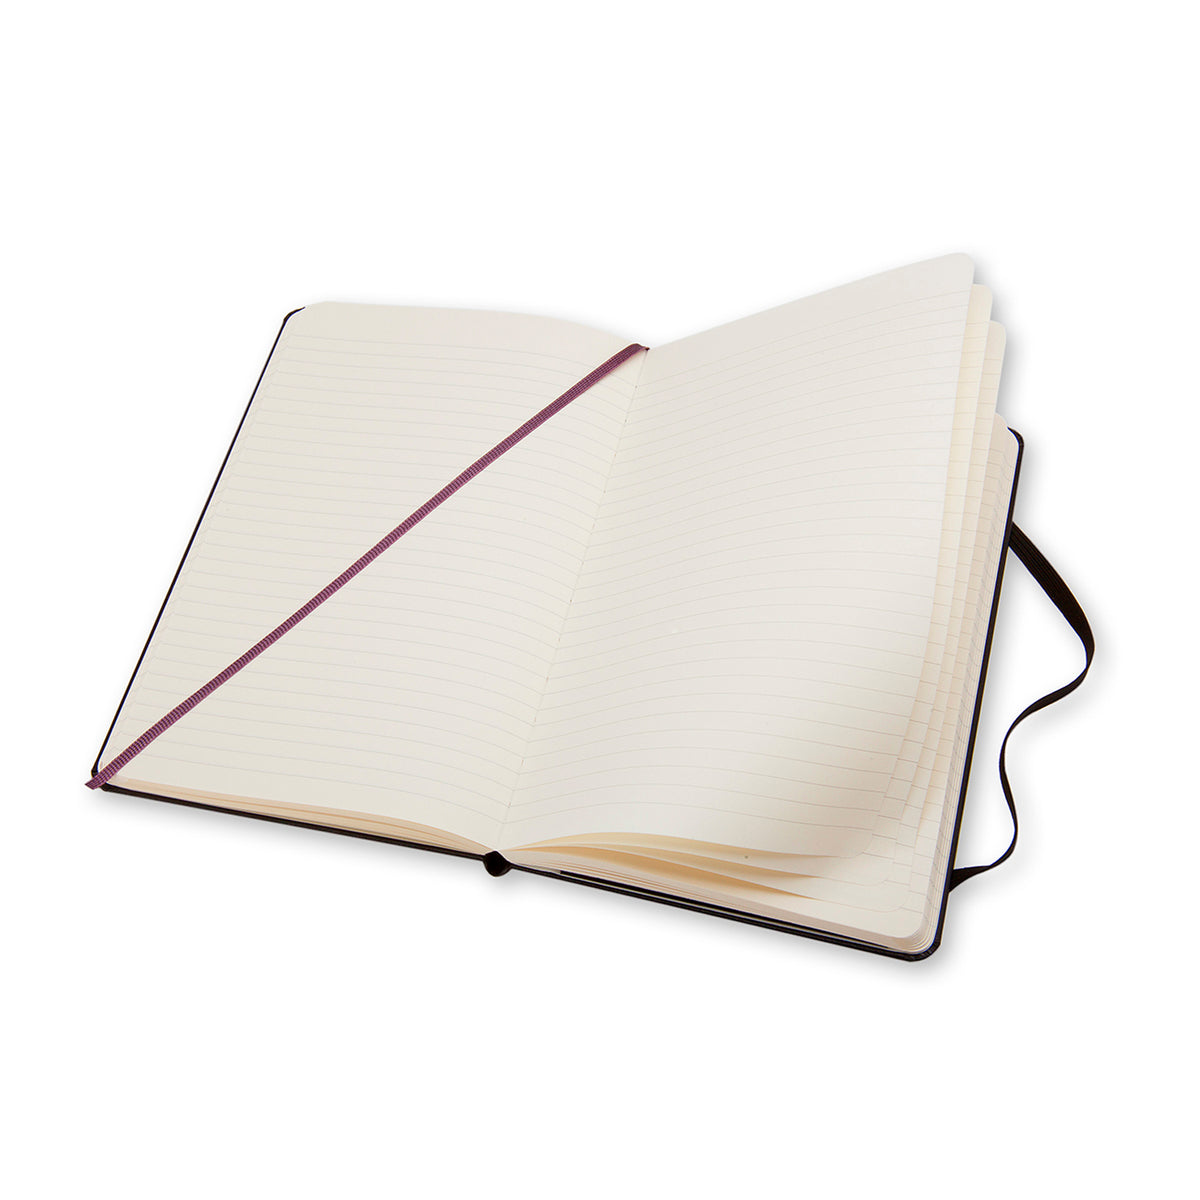 Moleskine - Classic Hard Cover Notebook - Ruled - Large - Black